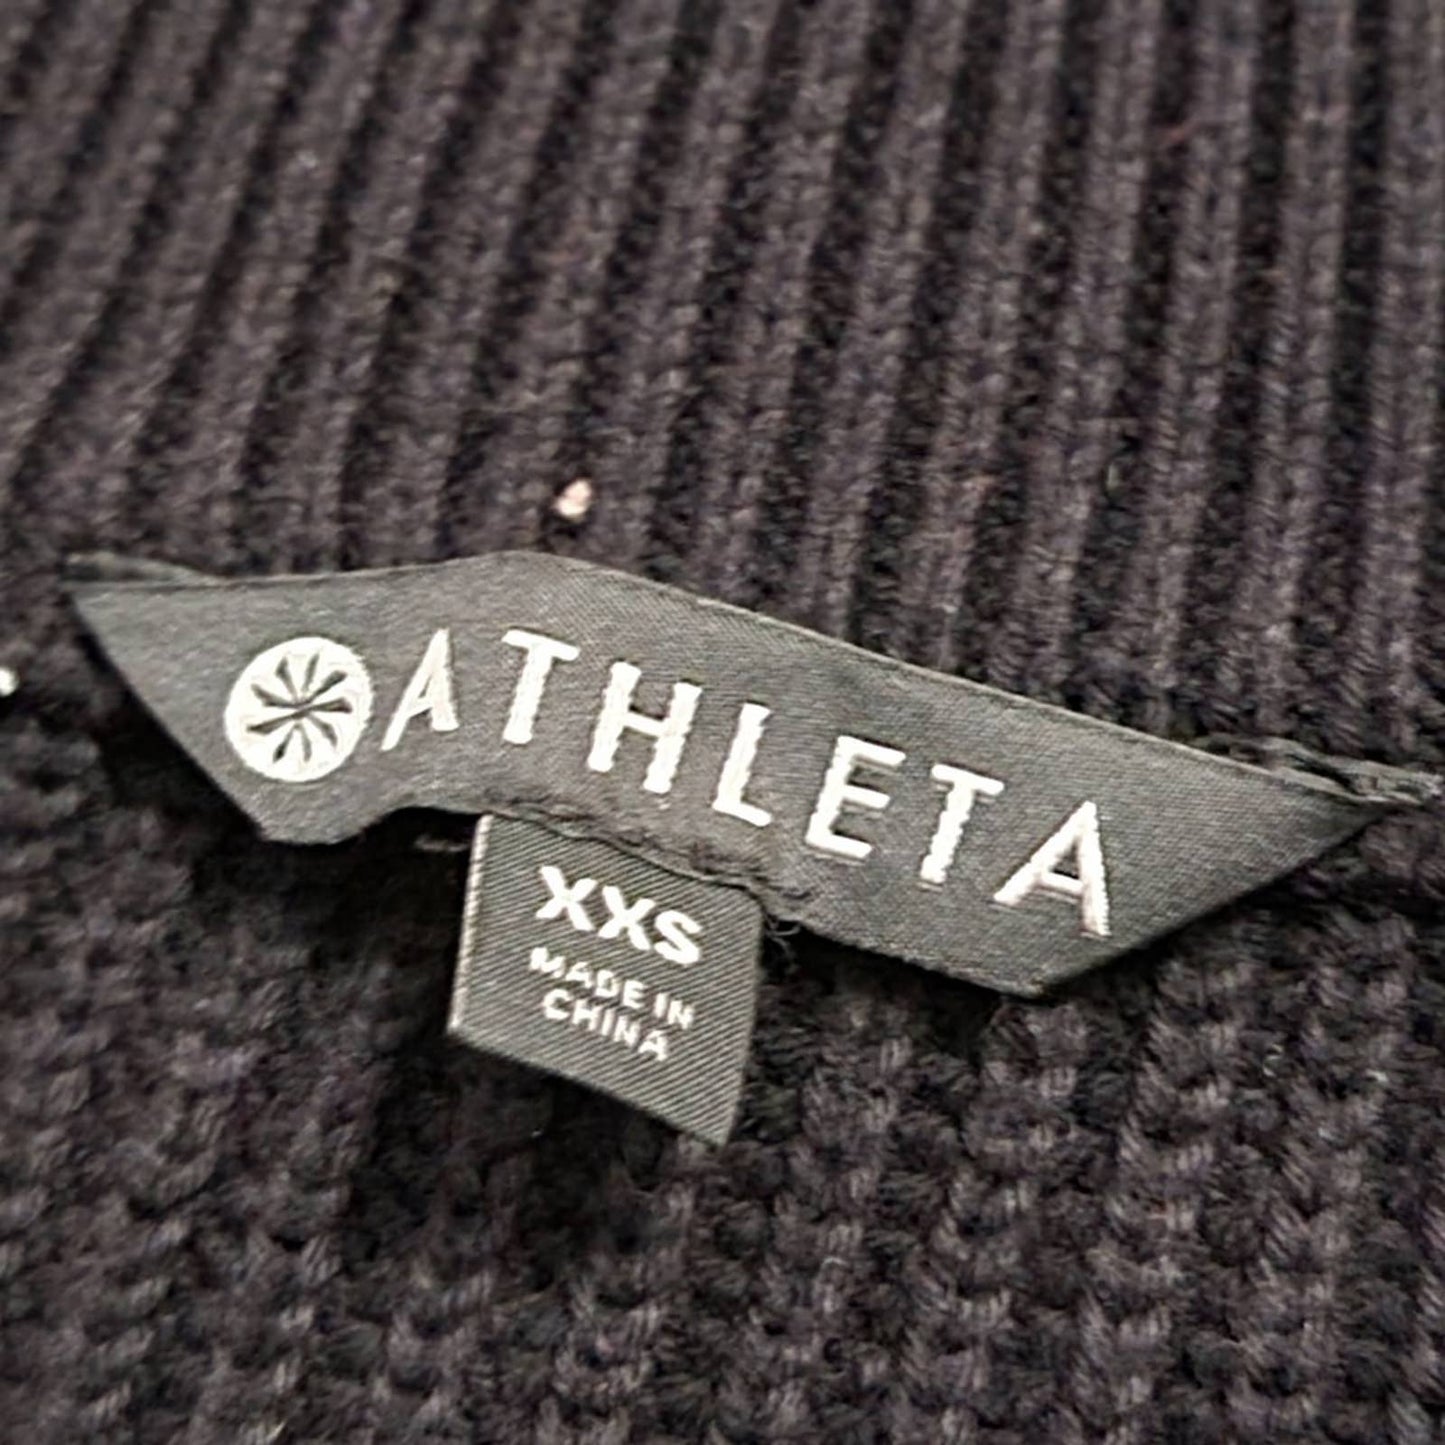 Athleta Black Ribbed Zip Up Cropped Sweater - XXS